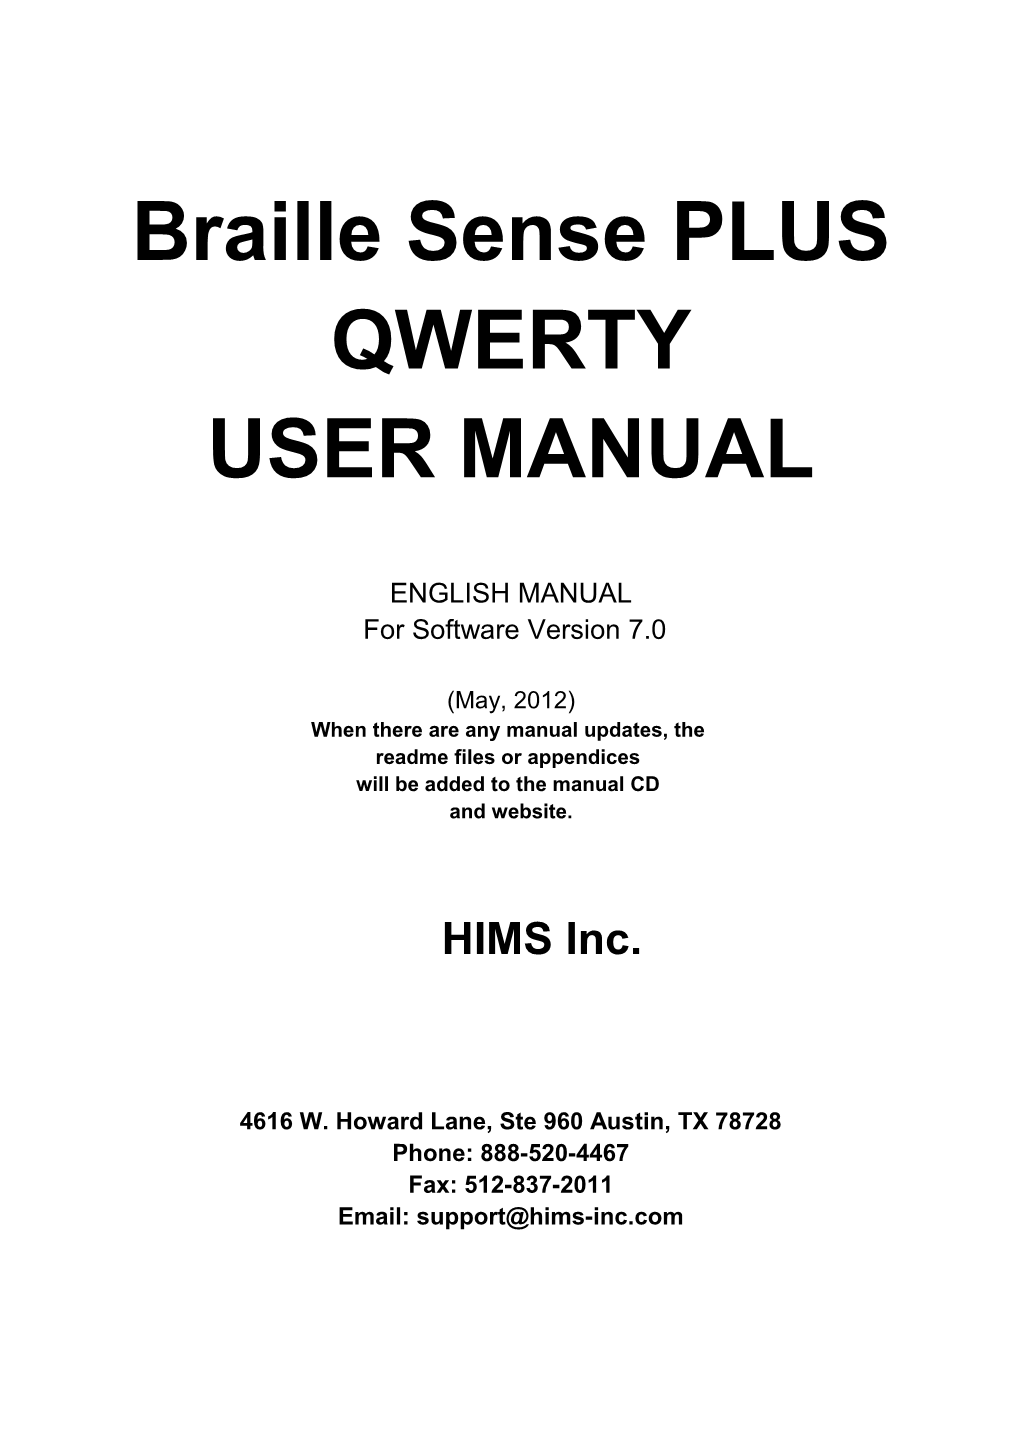 Braille Sense PLUS s1